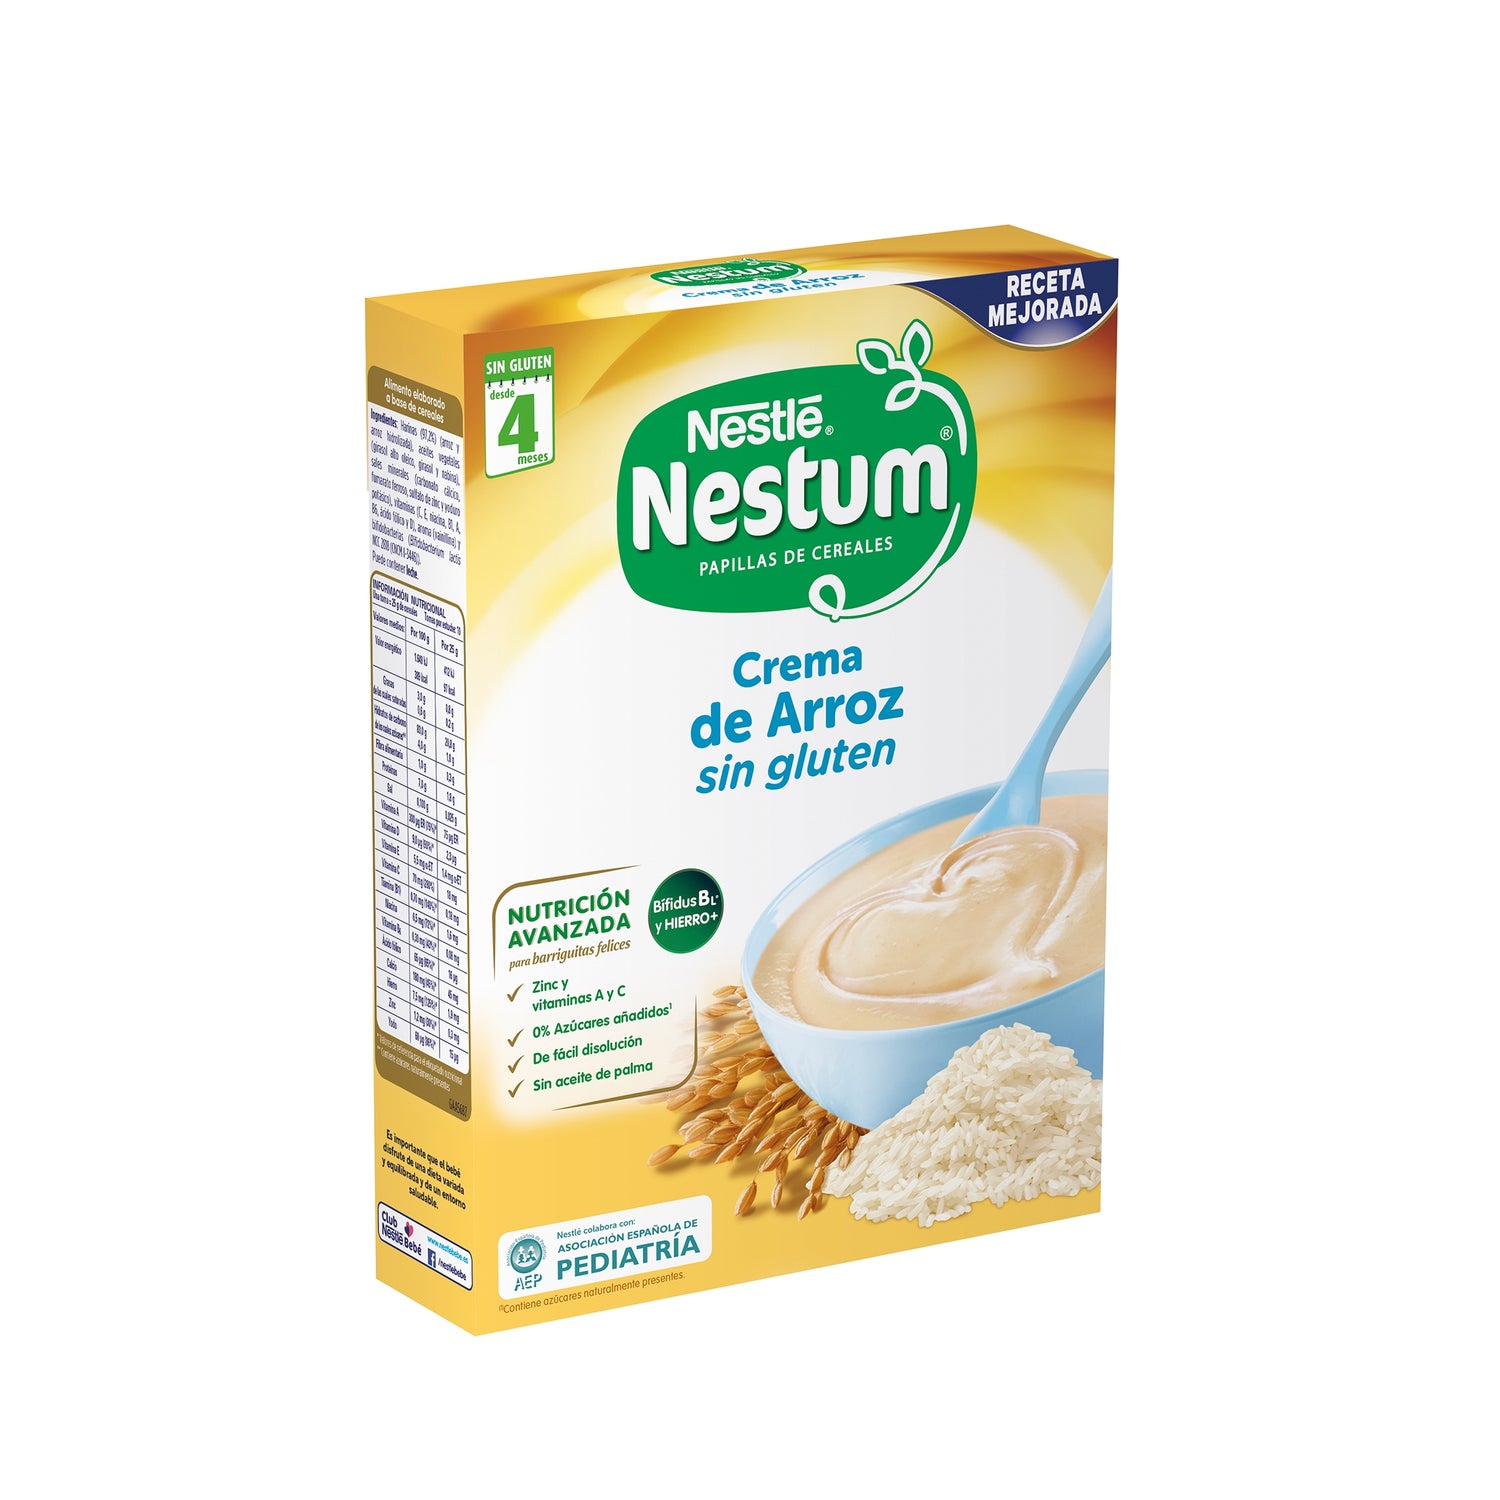 nestum rice for 10 months baby